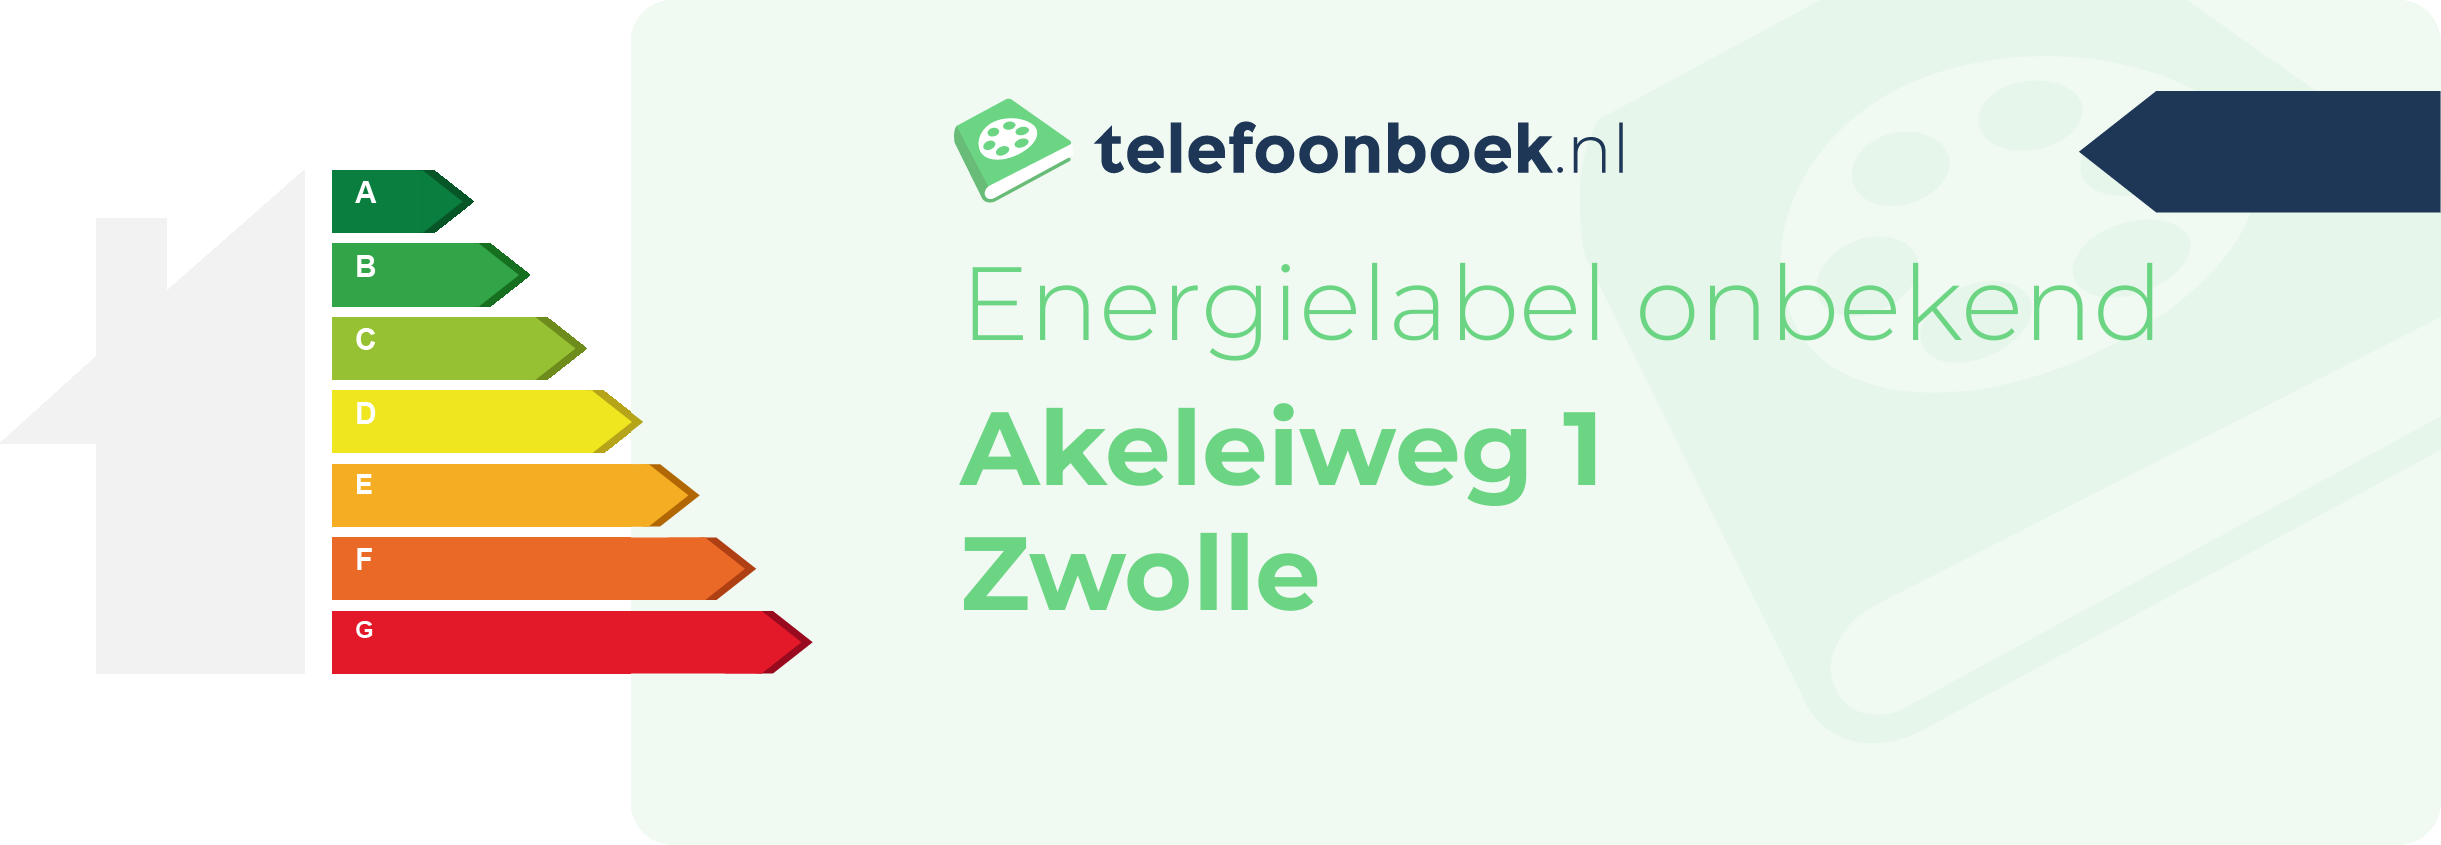 Energielabel Akeleiweg 1 Zwolle